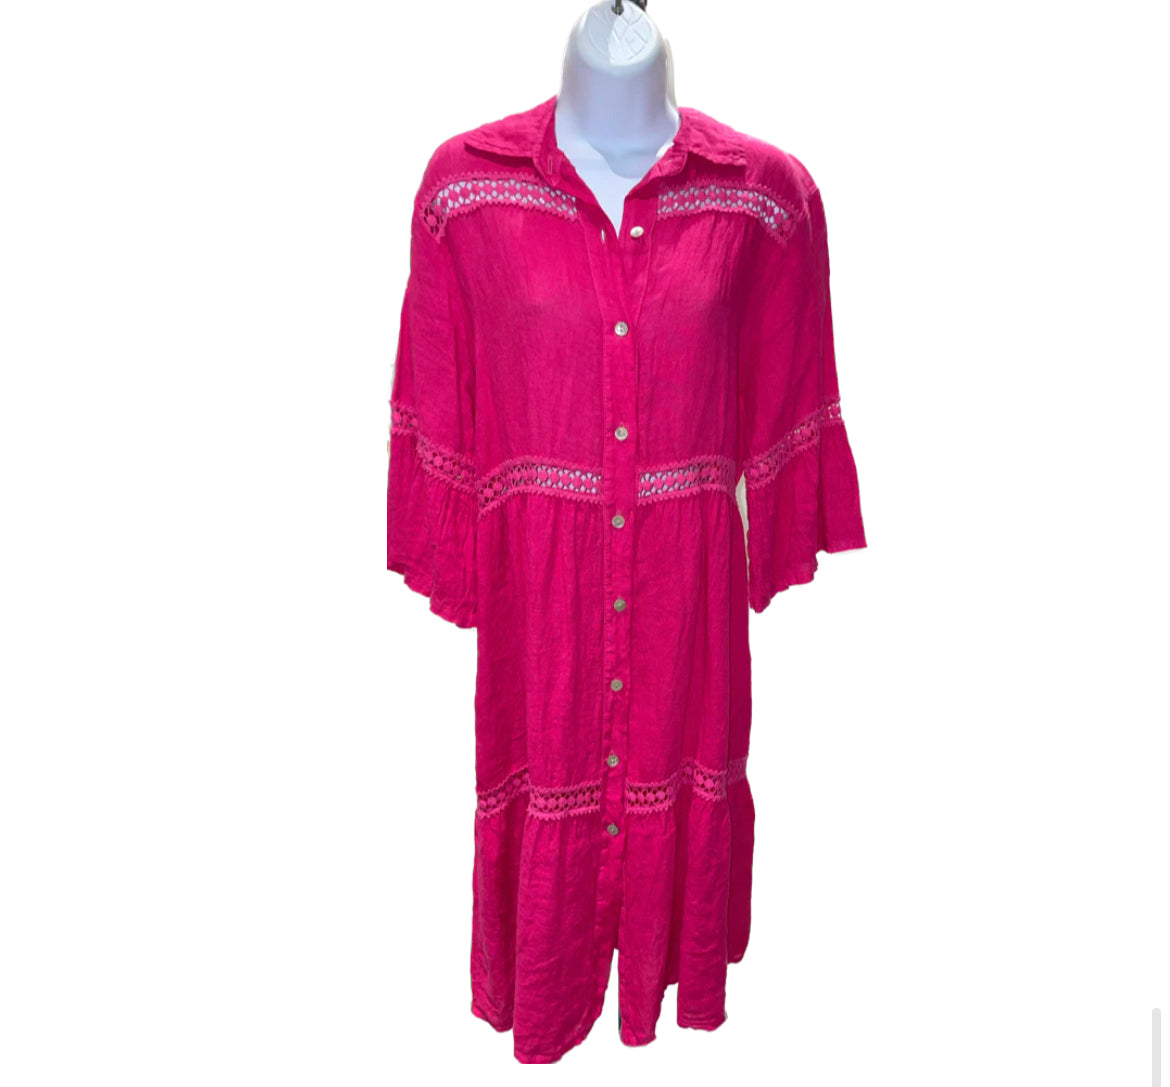 MINI L/S Linen Dress w Crochet Details - Fuchsia